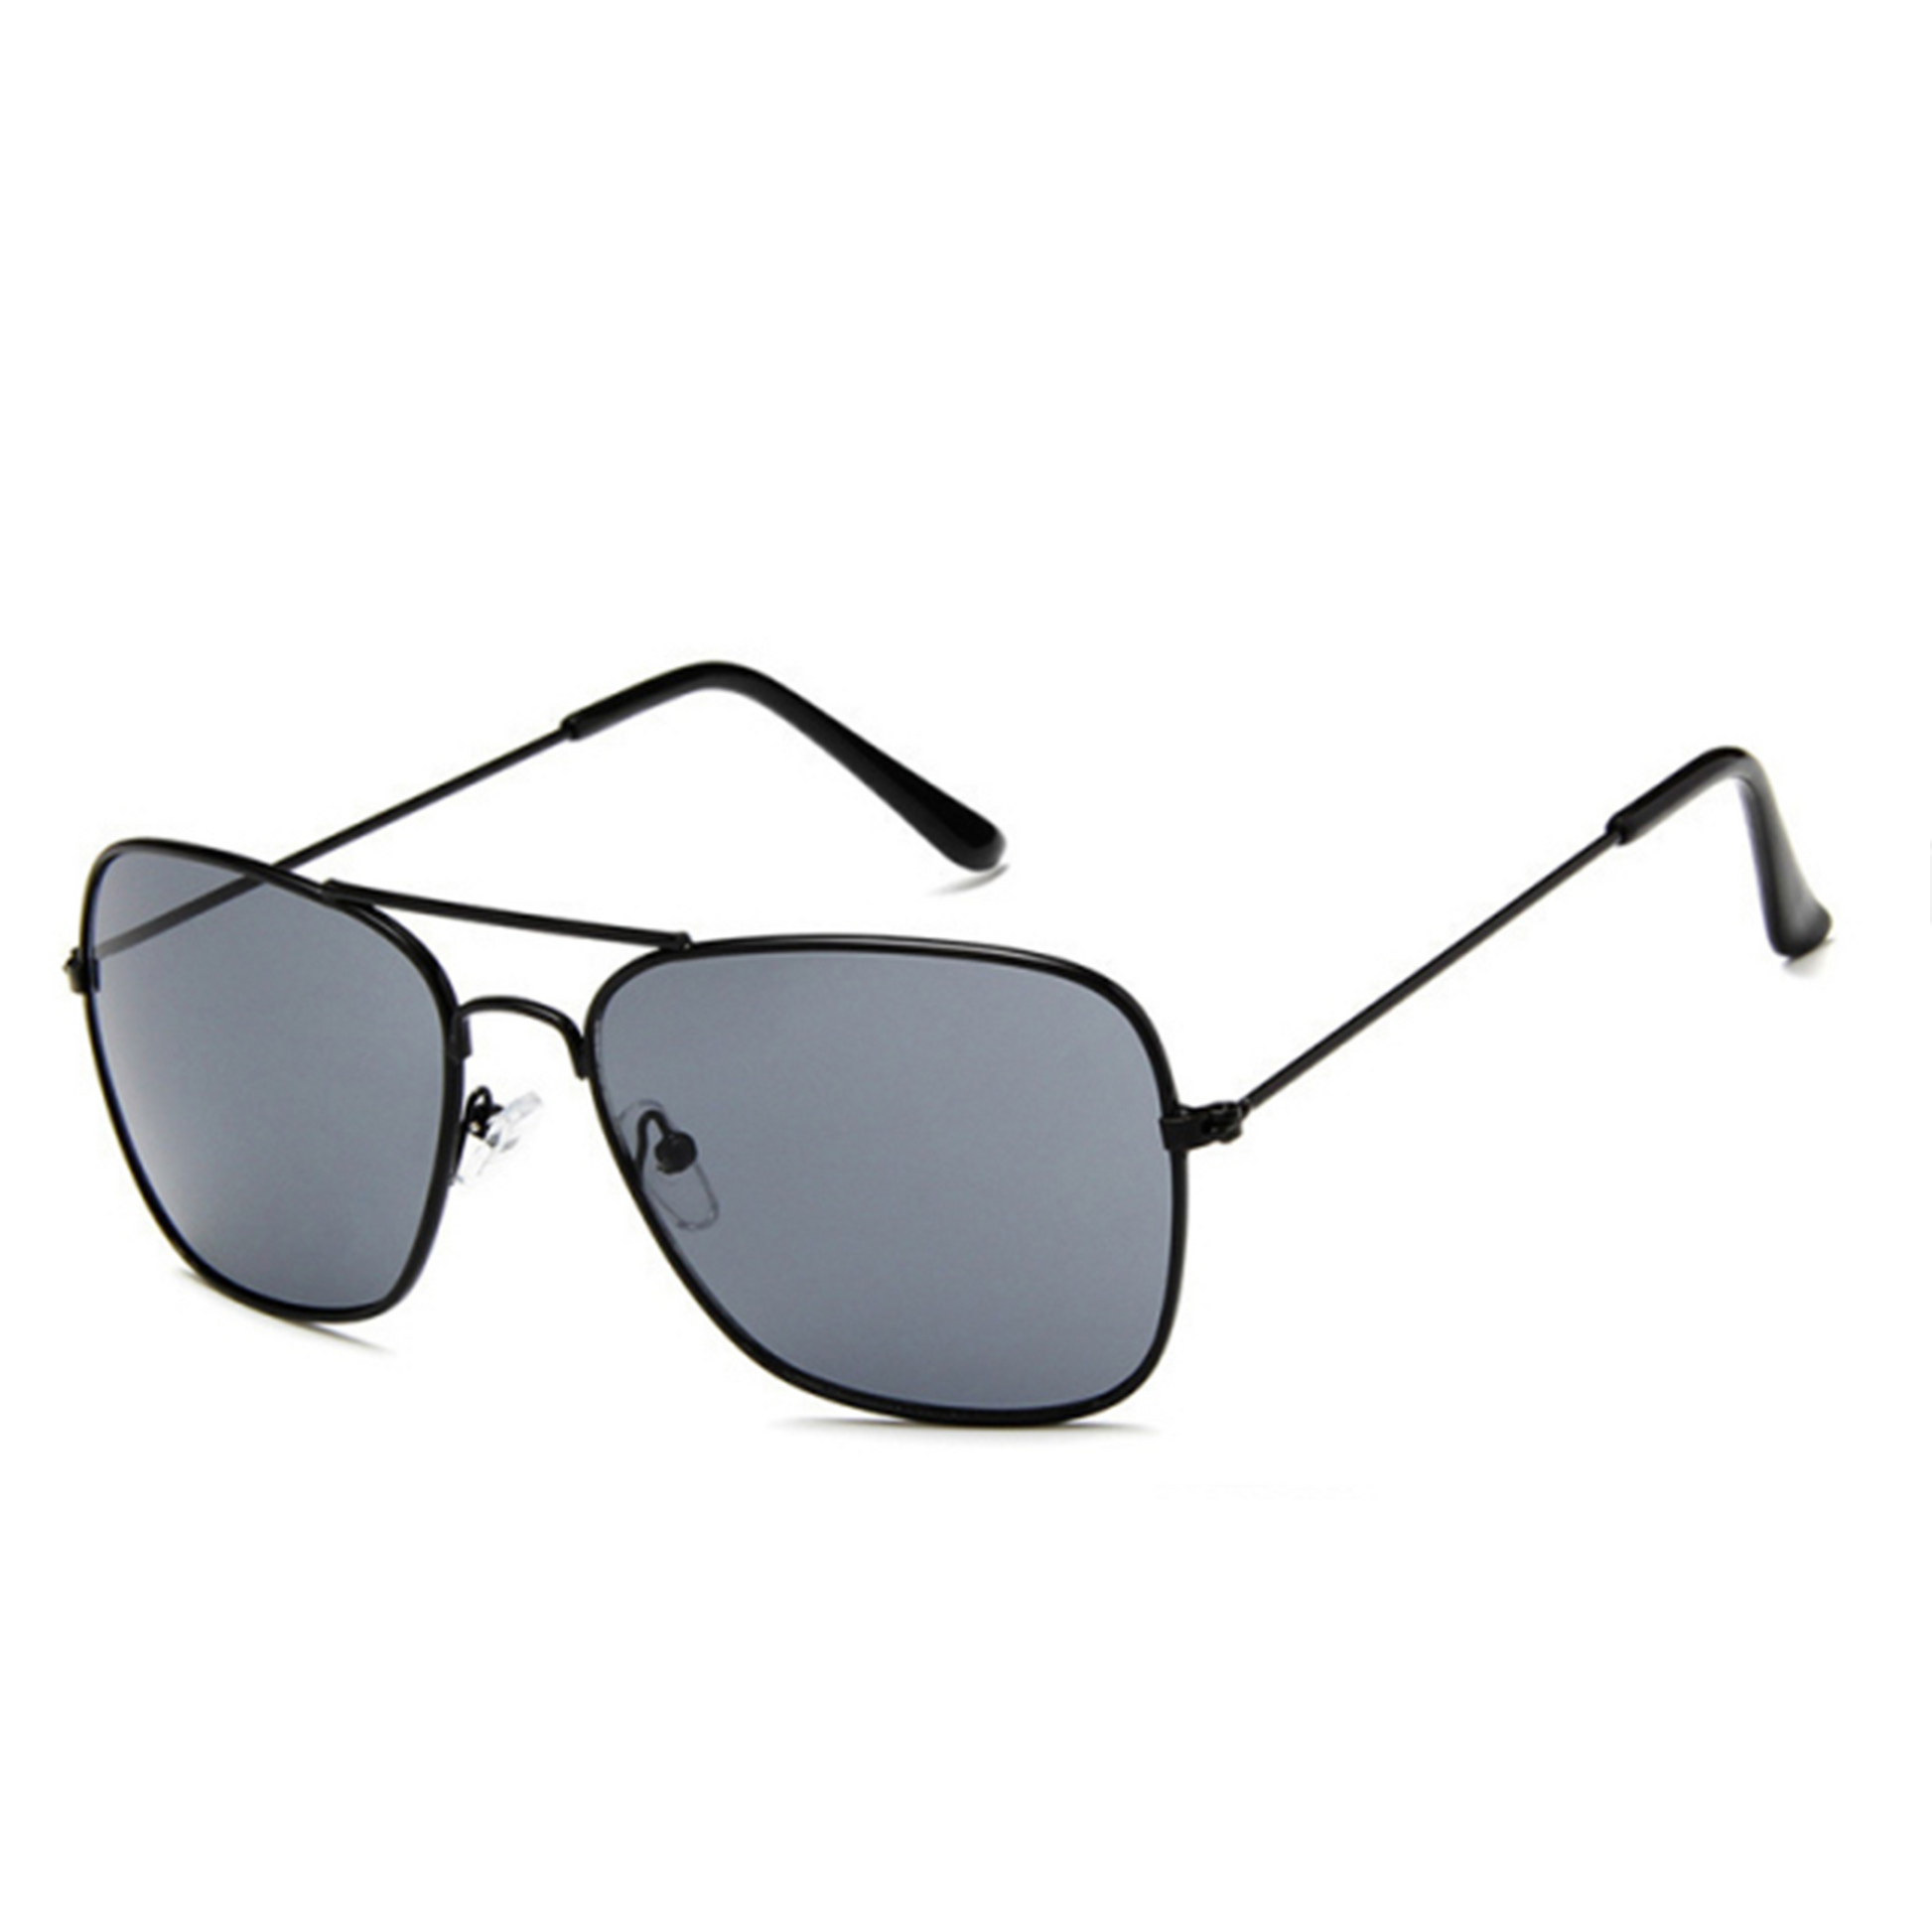 Tasker & Shaw | Luxury Menswear | Eagle, square aviator style sunglasses